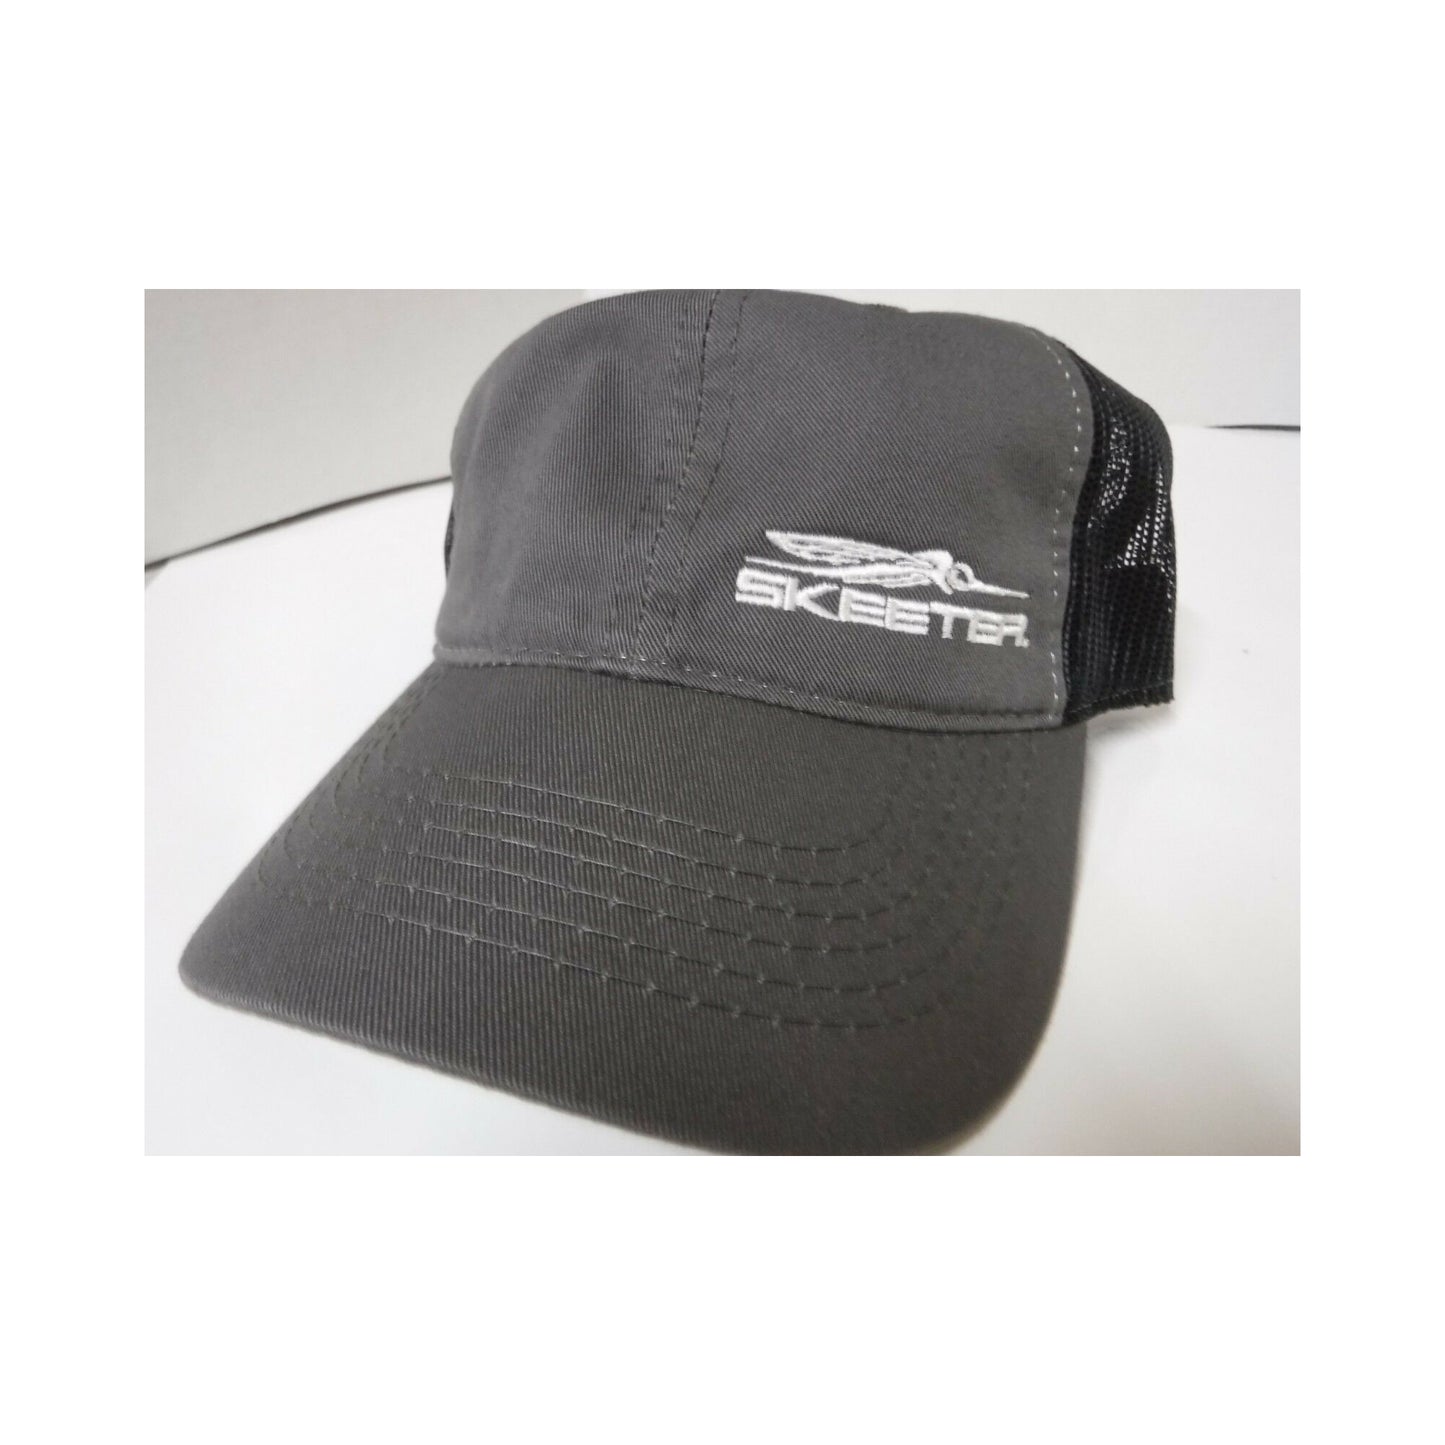 New Authentic Skeeter Richardson Hat  Charcoal/ Black Mesh/ White Skeeter Bug